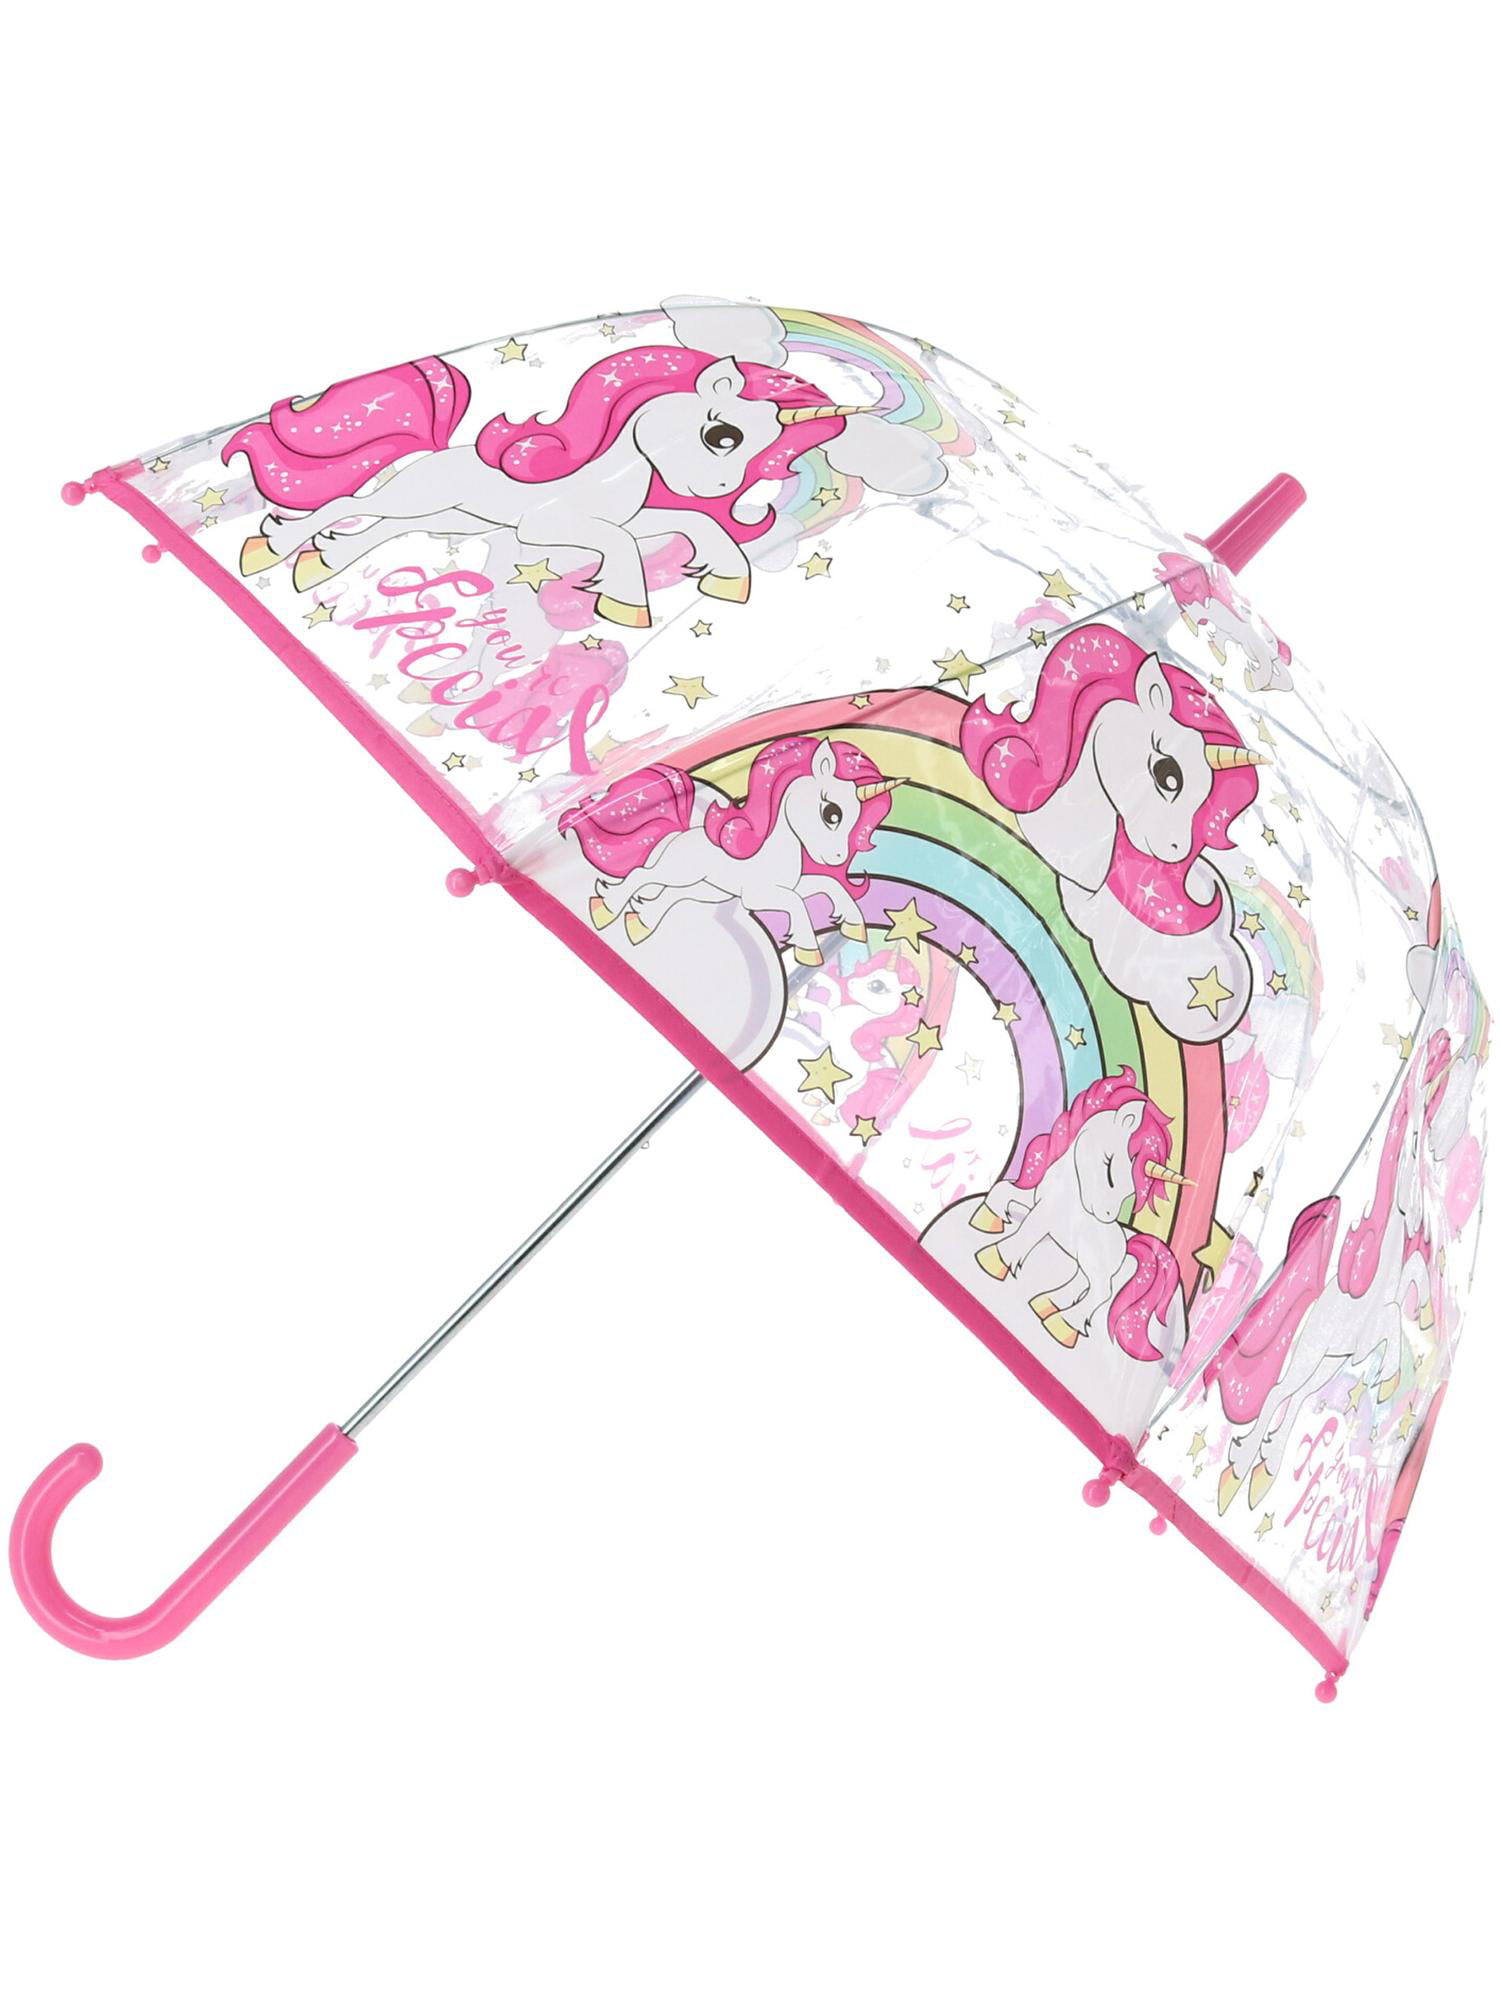 Umbrella Soy Luna child Disney 